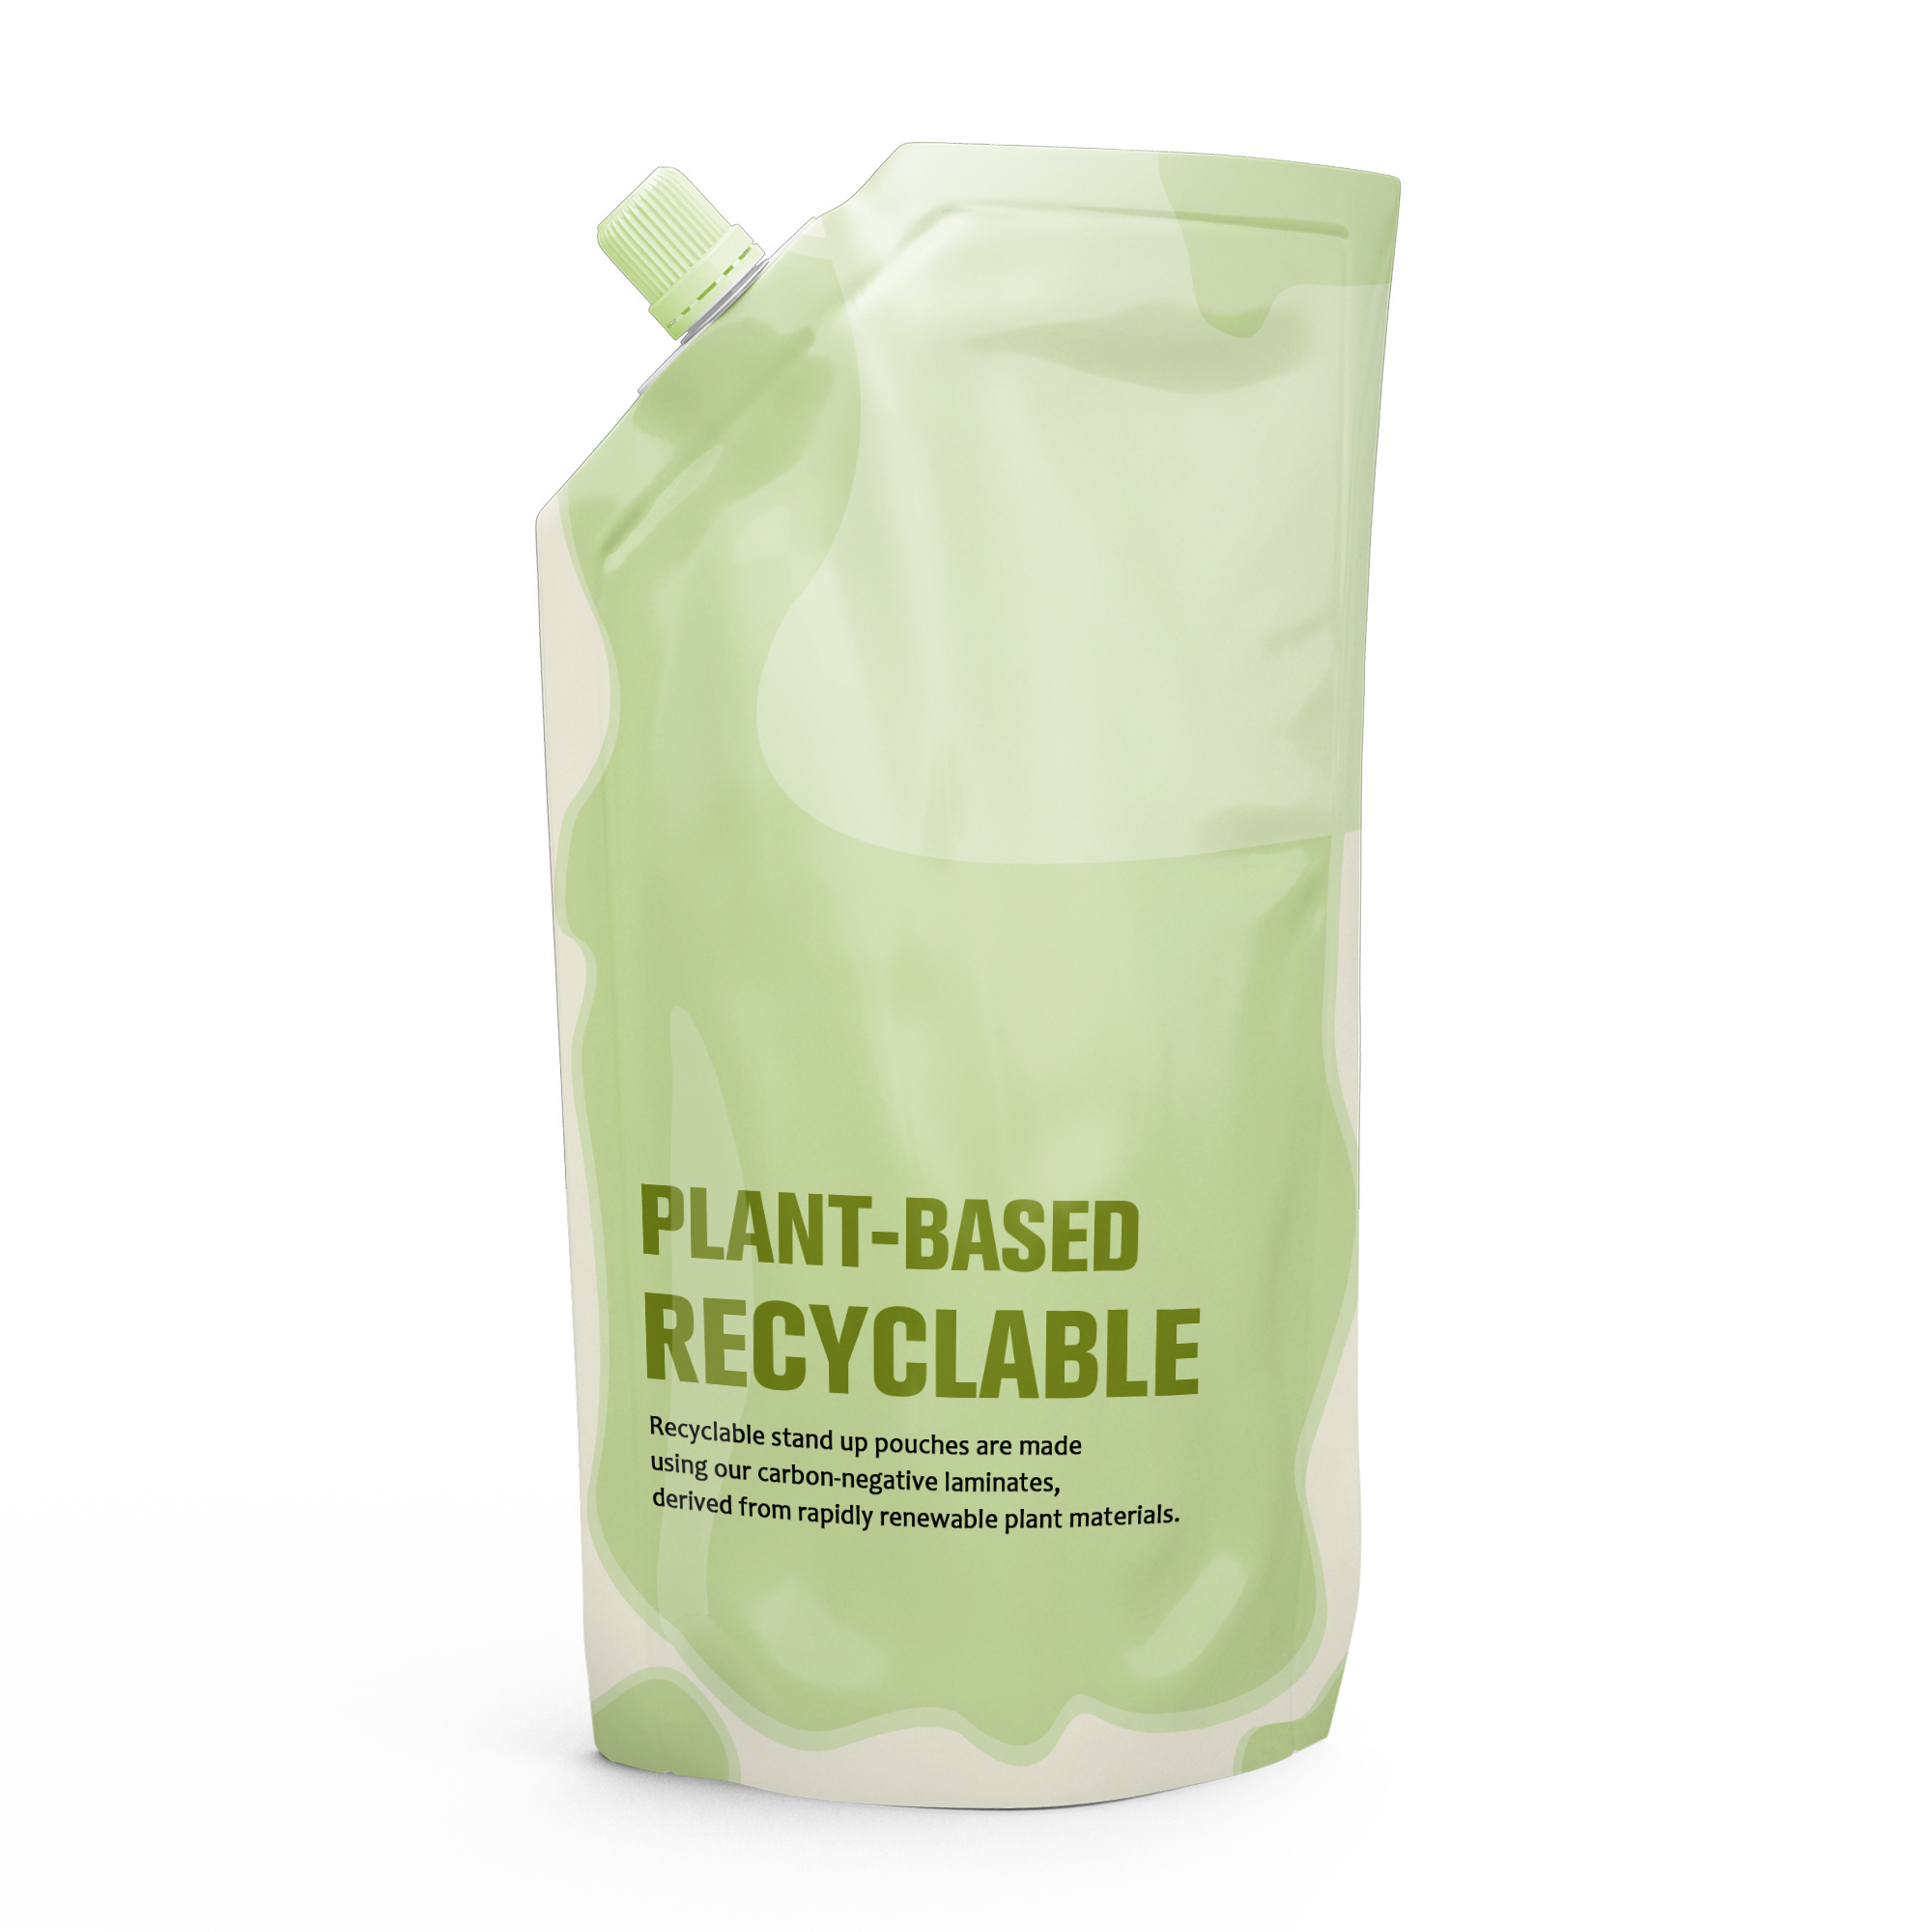 Bolsa de boquilla reciclable a base de plantas